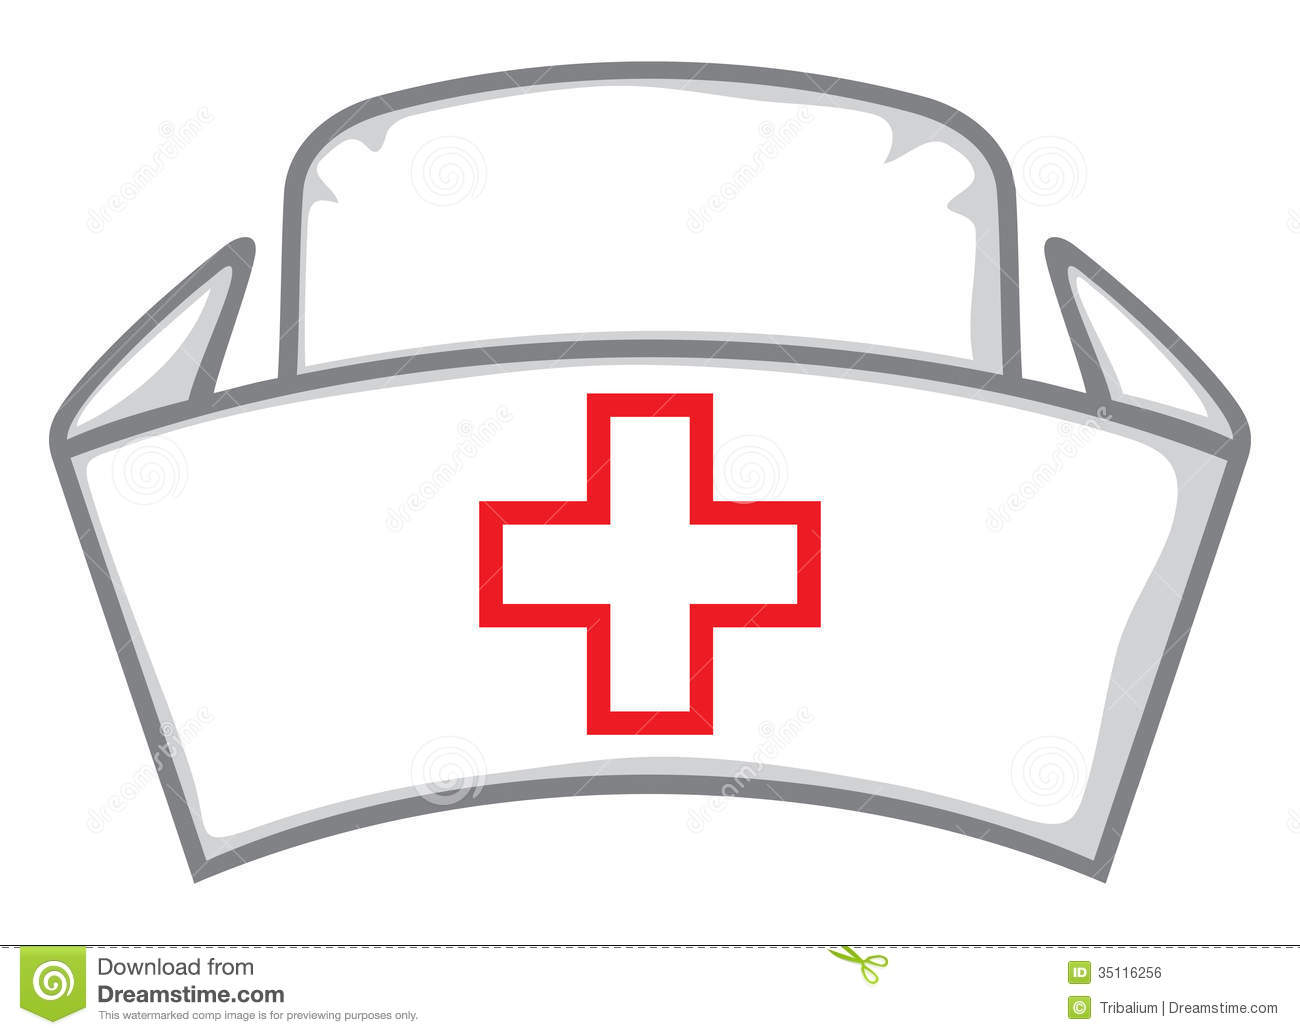 ... nurse hat stock ilrations